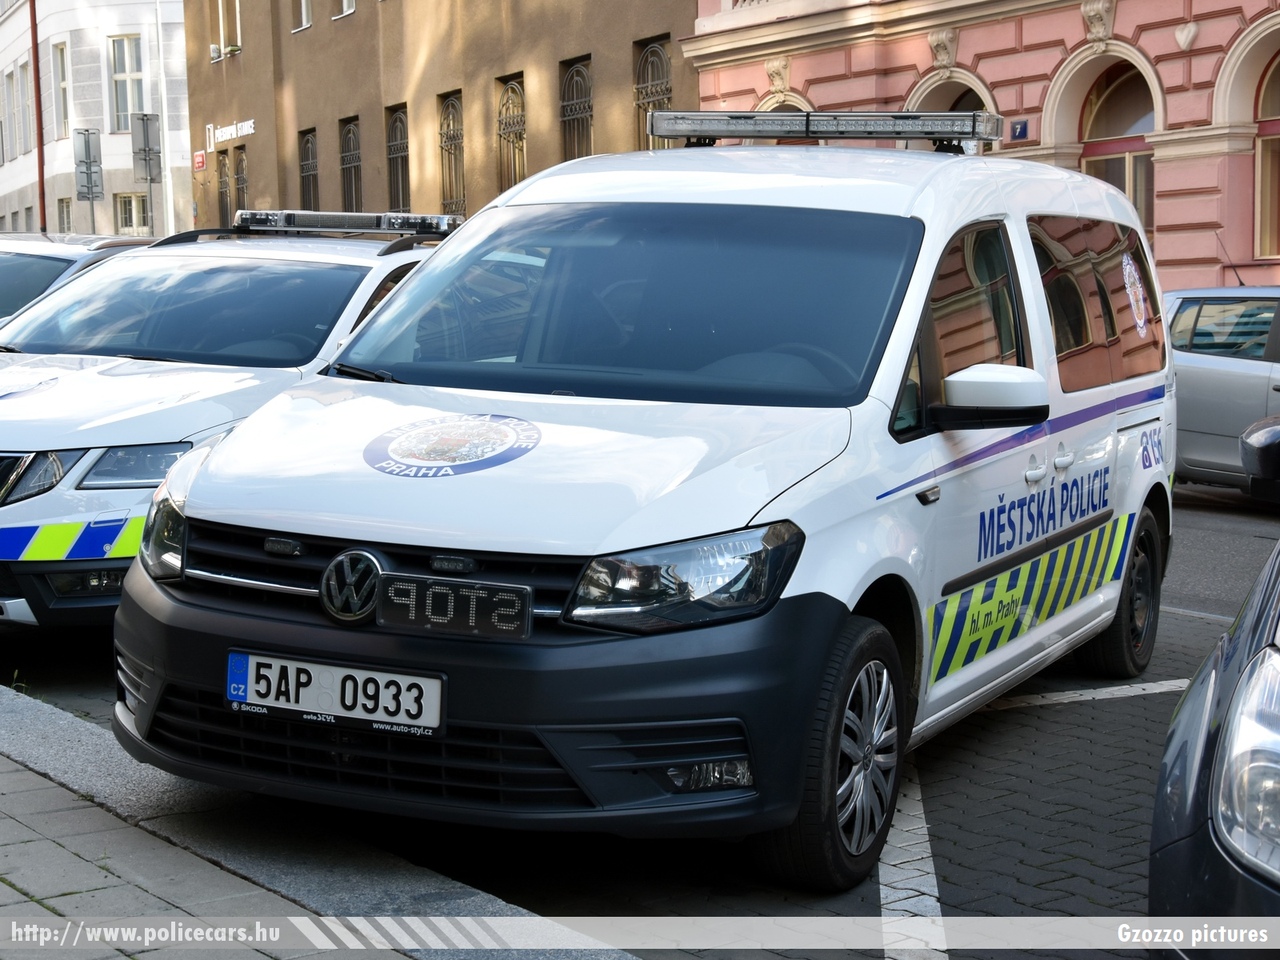 Volkswagen Caddy, Mìstská policie hl. m. Prahy, fotó: Gzozzo pictures
Keywords: cseh Csehország czech police policecar rendőrautó rendőr